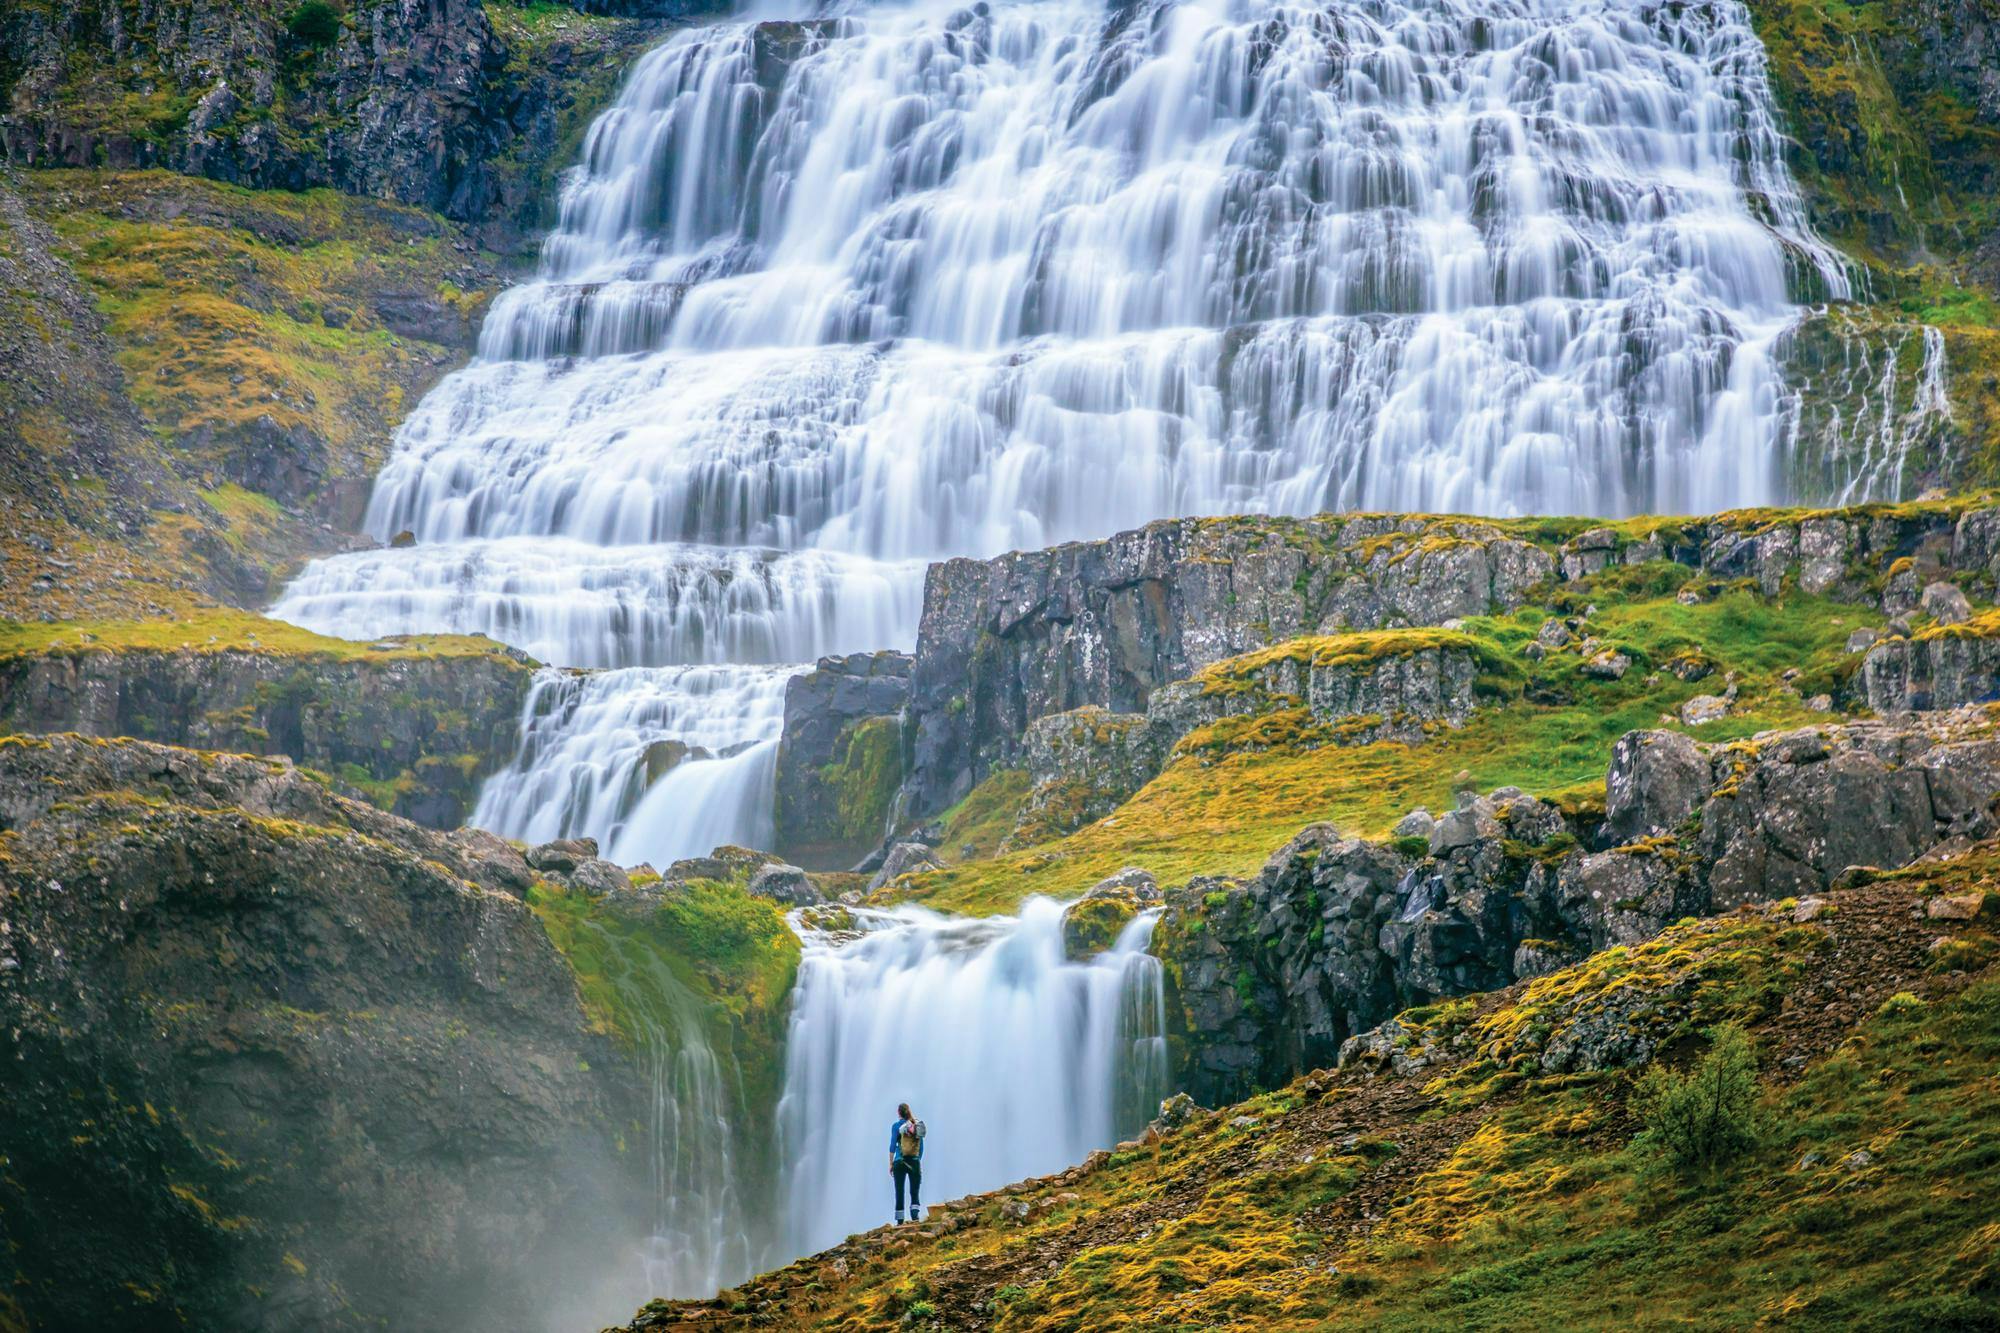 A hiker stands in front of the Dynjandi waterfall in Arnarfjörður in the Westfjords region of Iceland